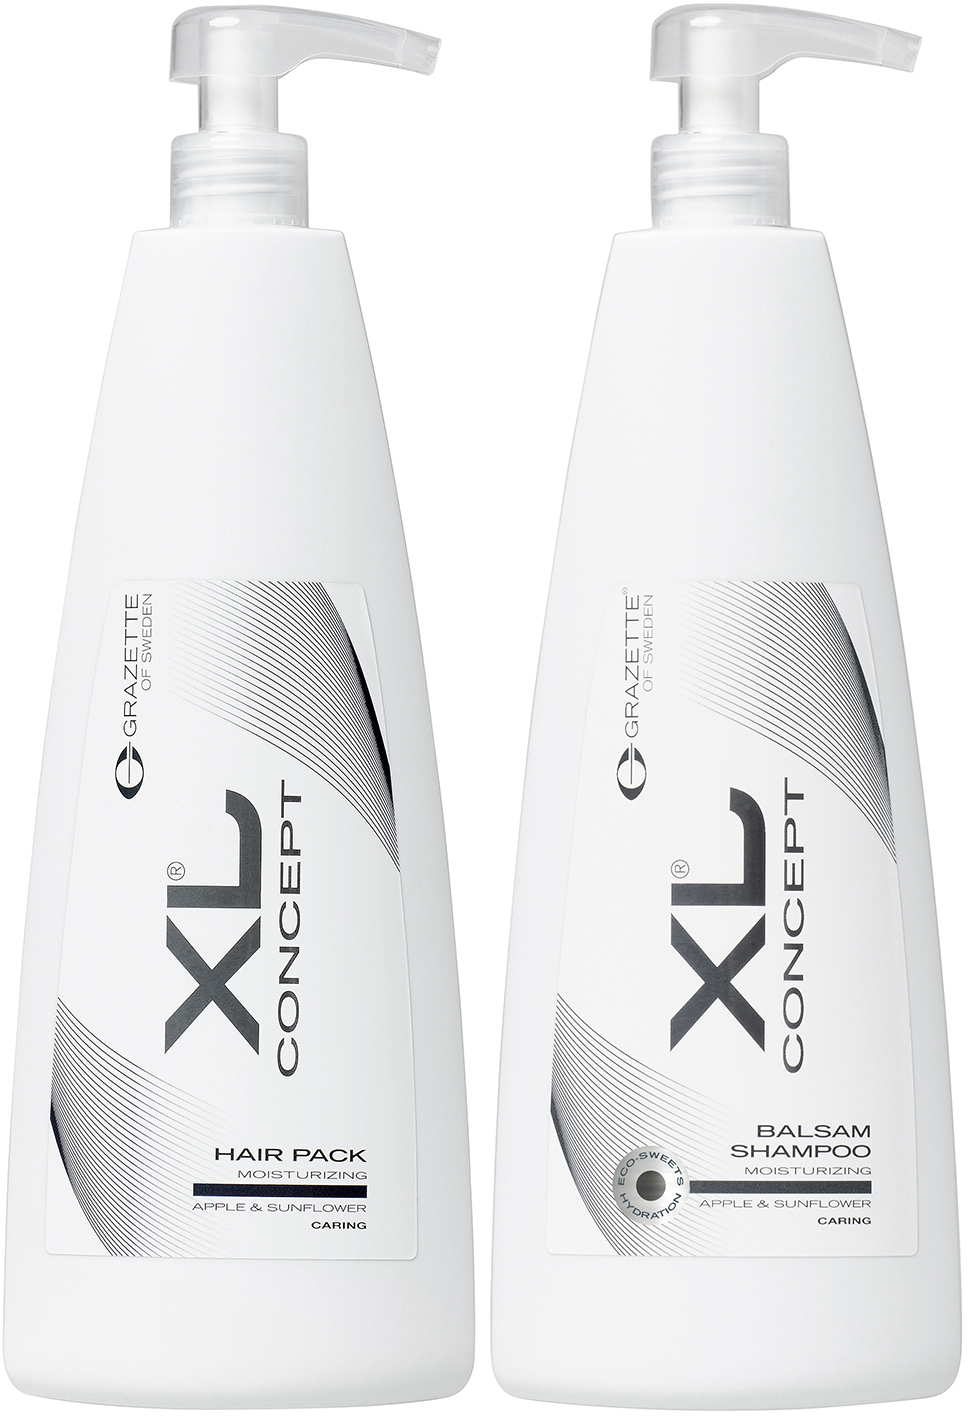 Grazette XL Balsam Shampoo Duo